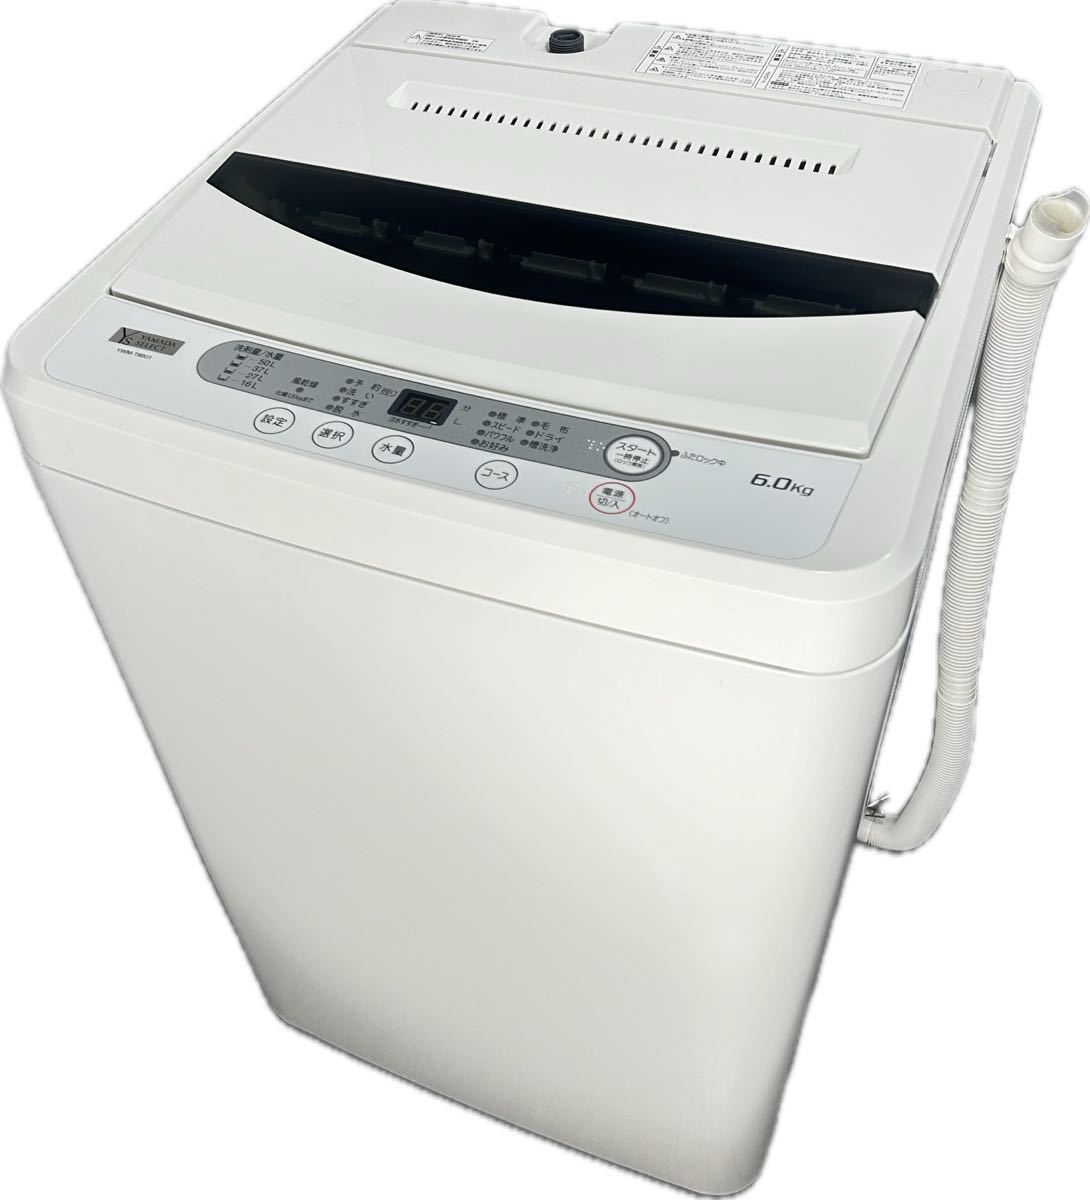 ★6kg洗濯機★ ヤマダセレクト 2020年 YWM-T60G1 新生活 一人暮らし コンパクト 50/60Hz